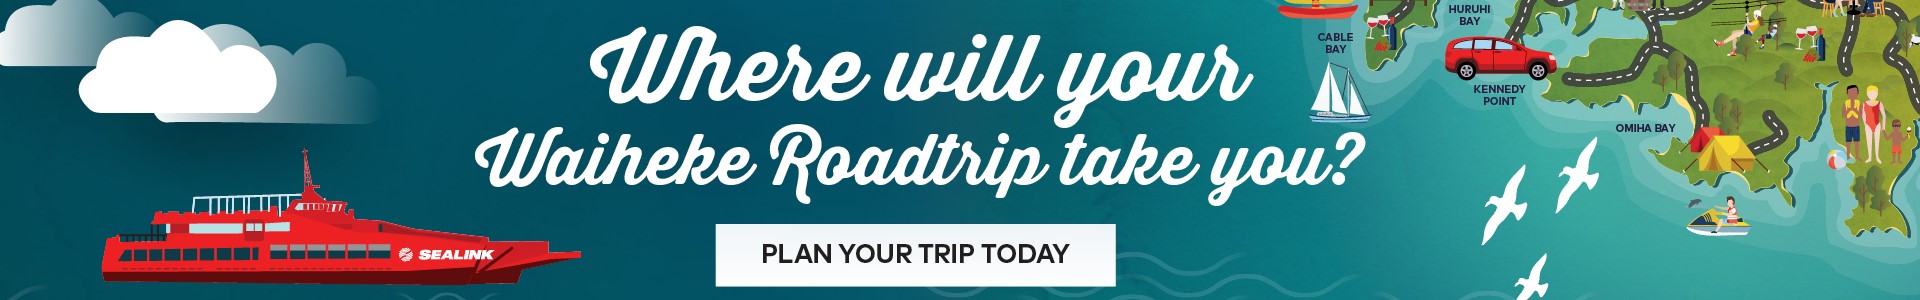 Your Waiheke Road trip starts here - banner